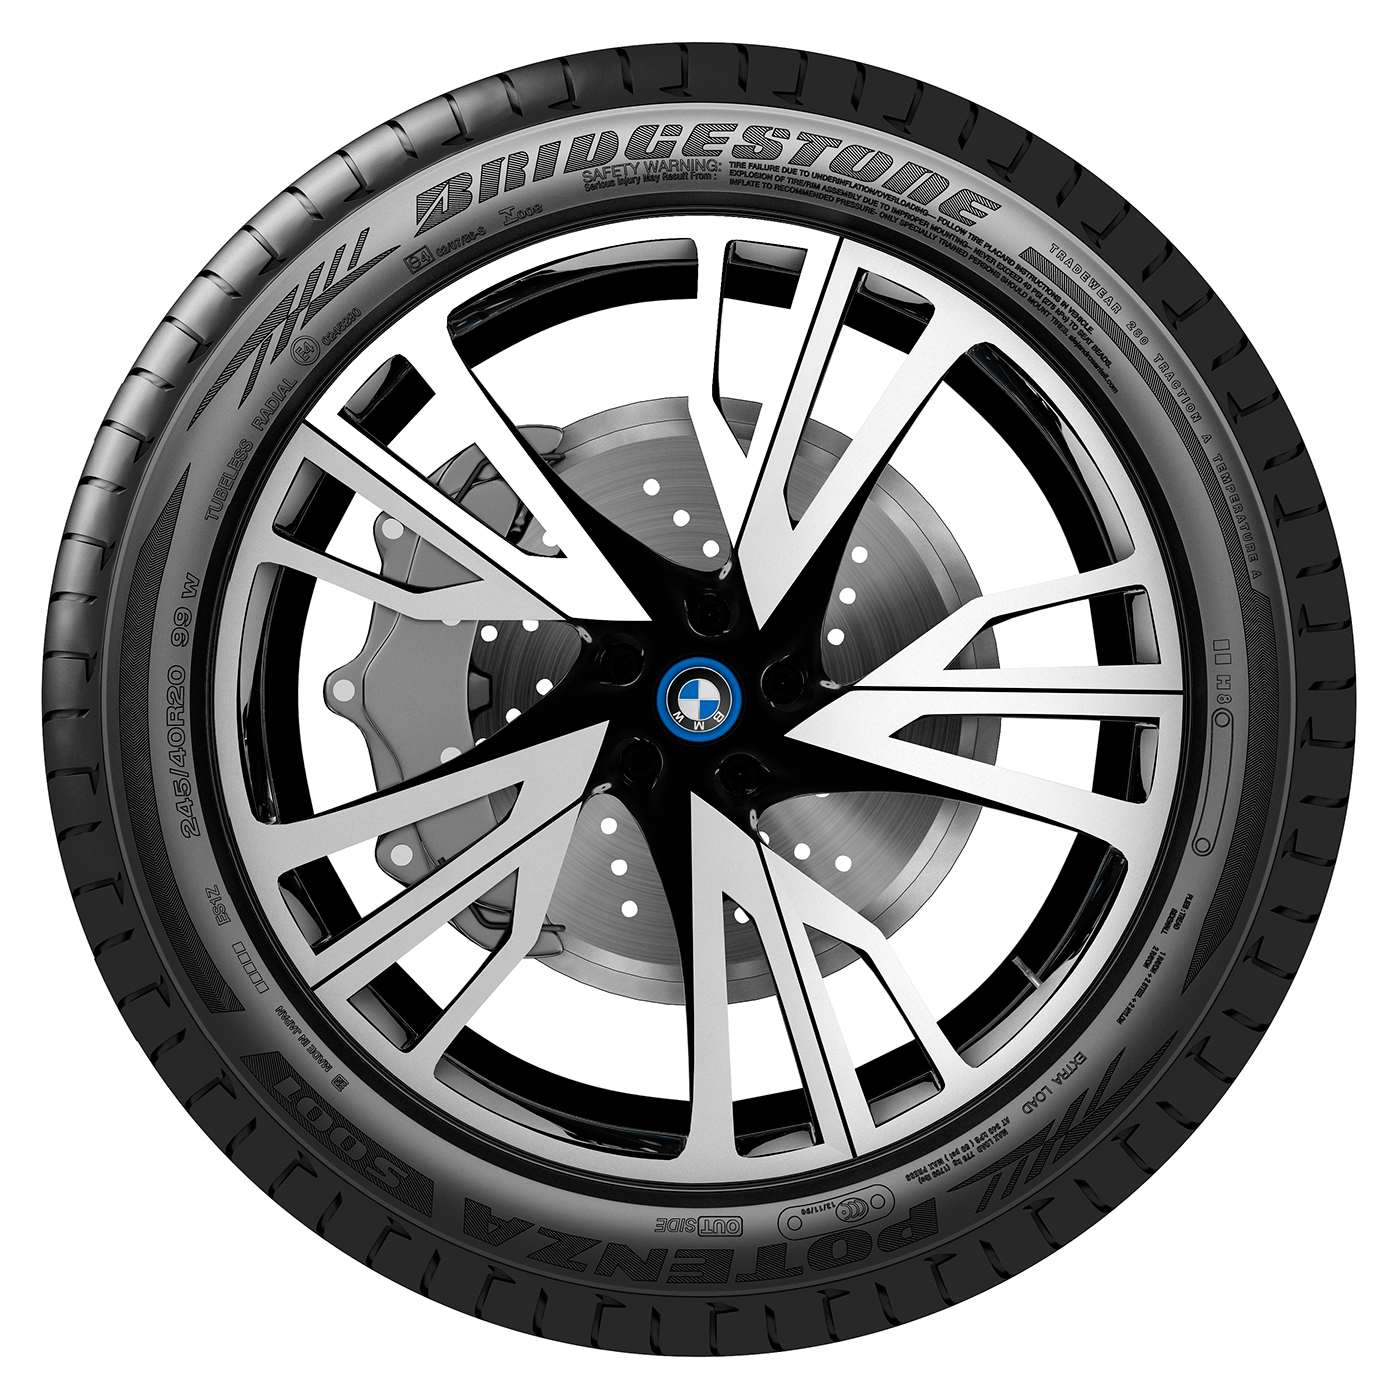 BMW i8 wheel Tire potenza S001 future energy electric drive car sport progressive BMWi Bridgestone